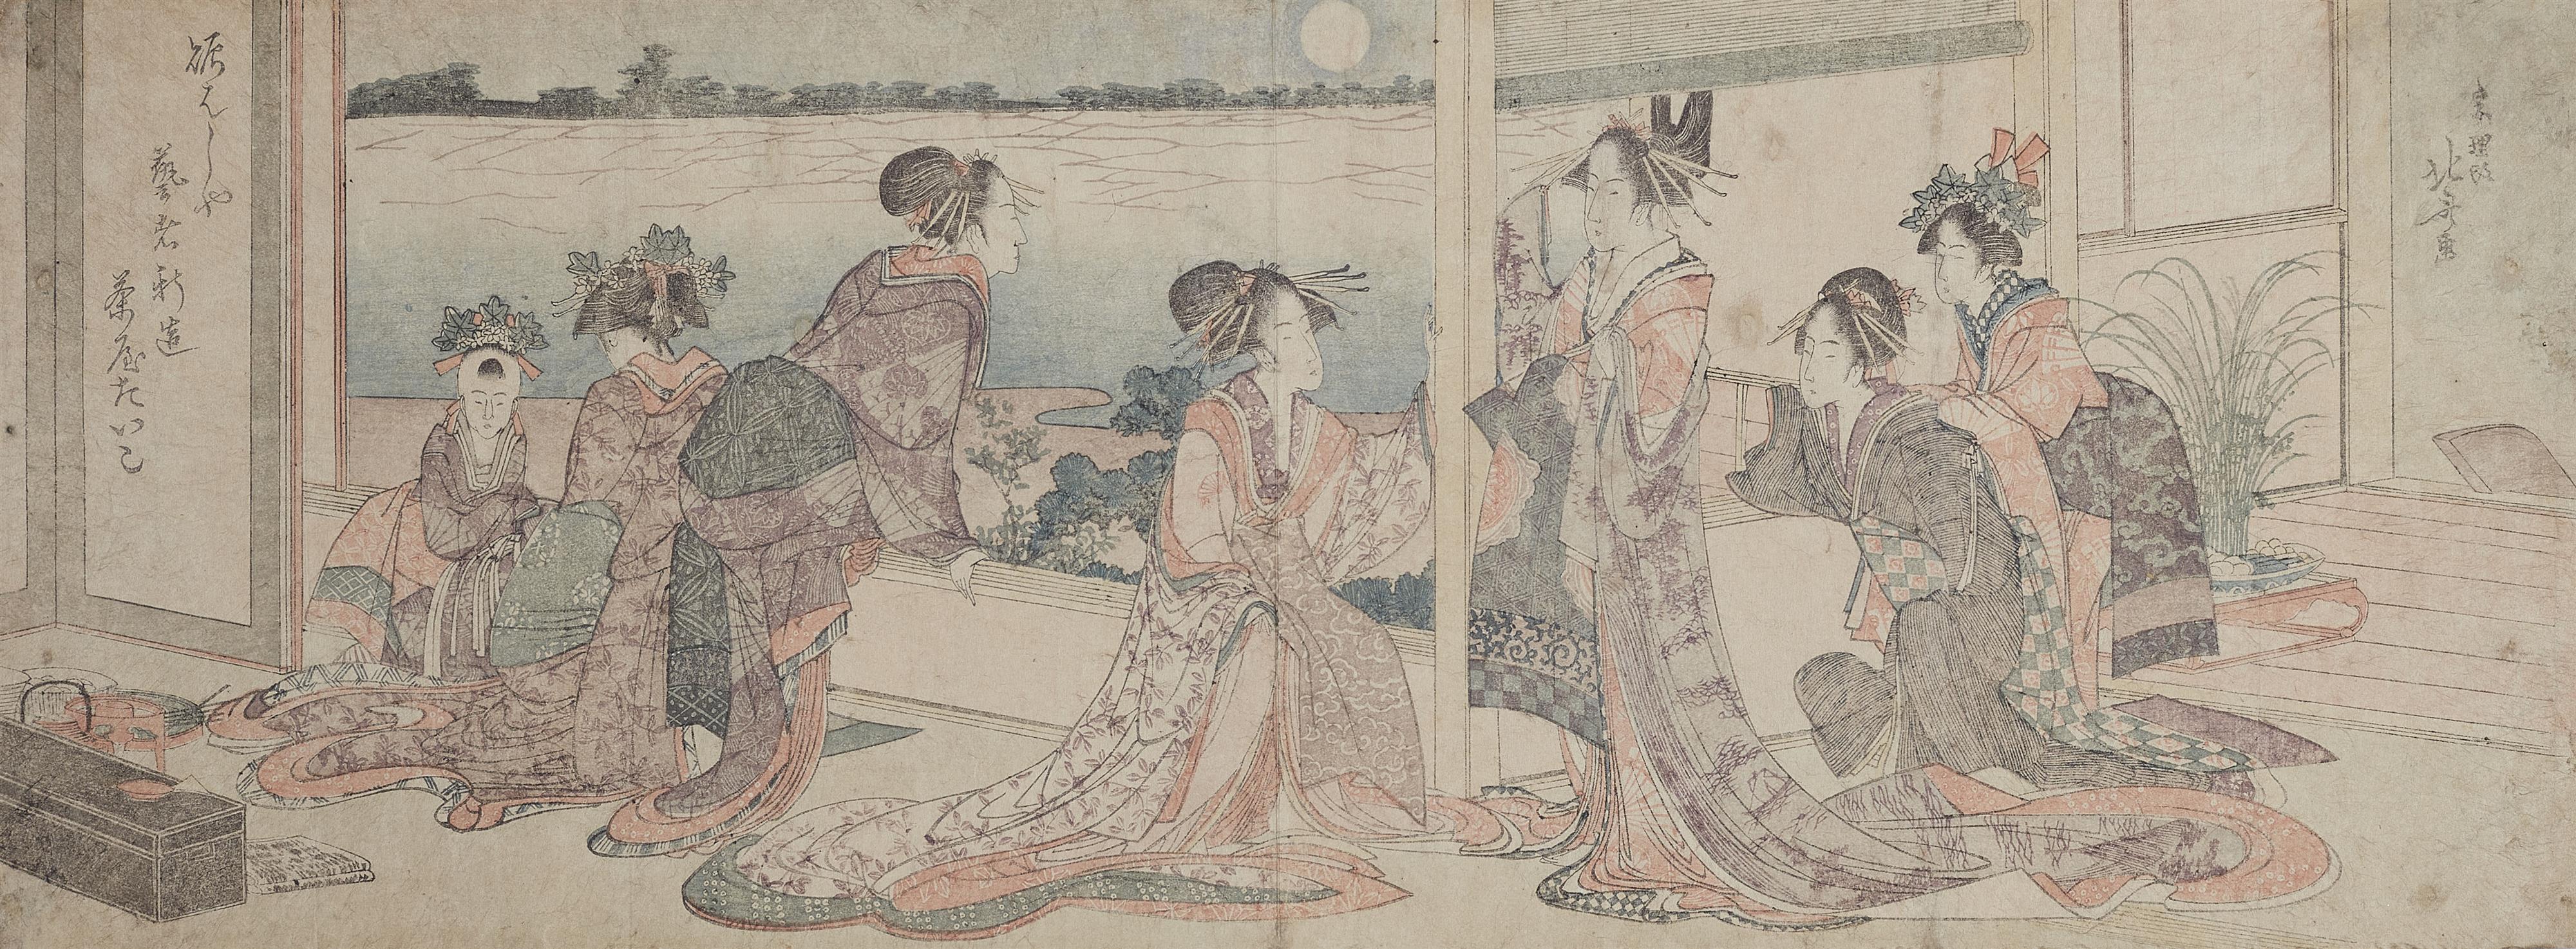 Katsushika Hokusai - Courtesans, geisha, shinzô and kamuro enjoying the full moon - image-2